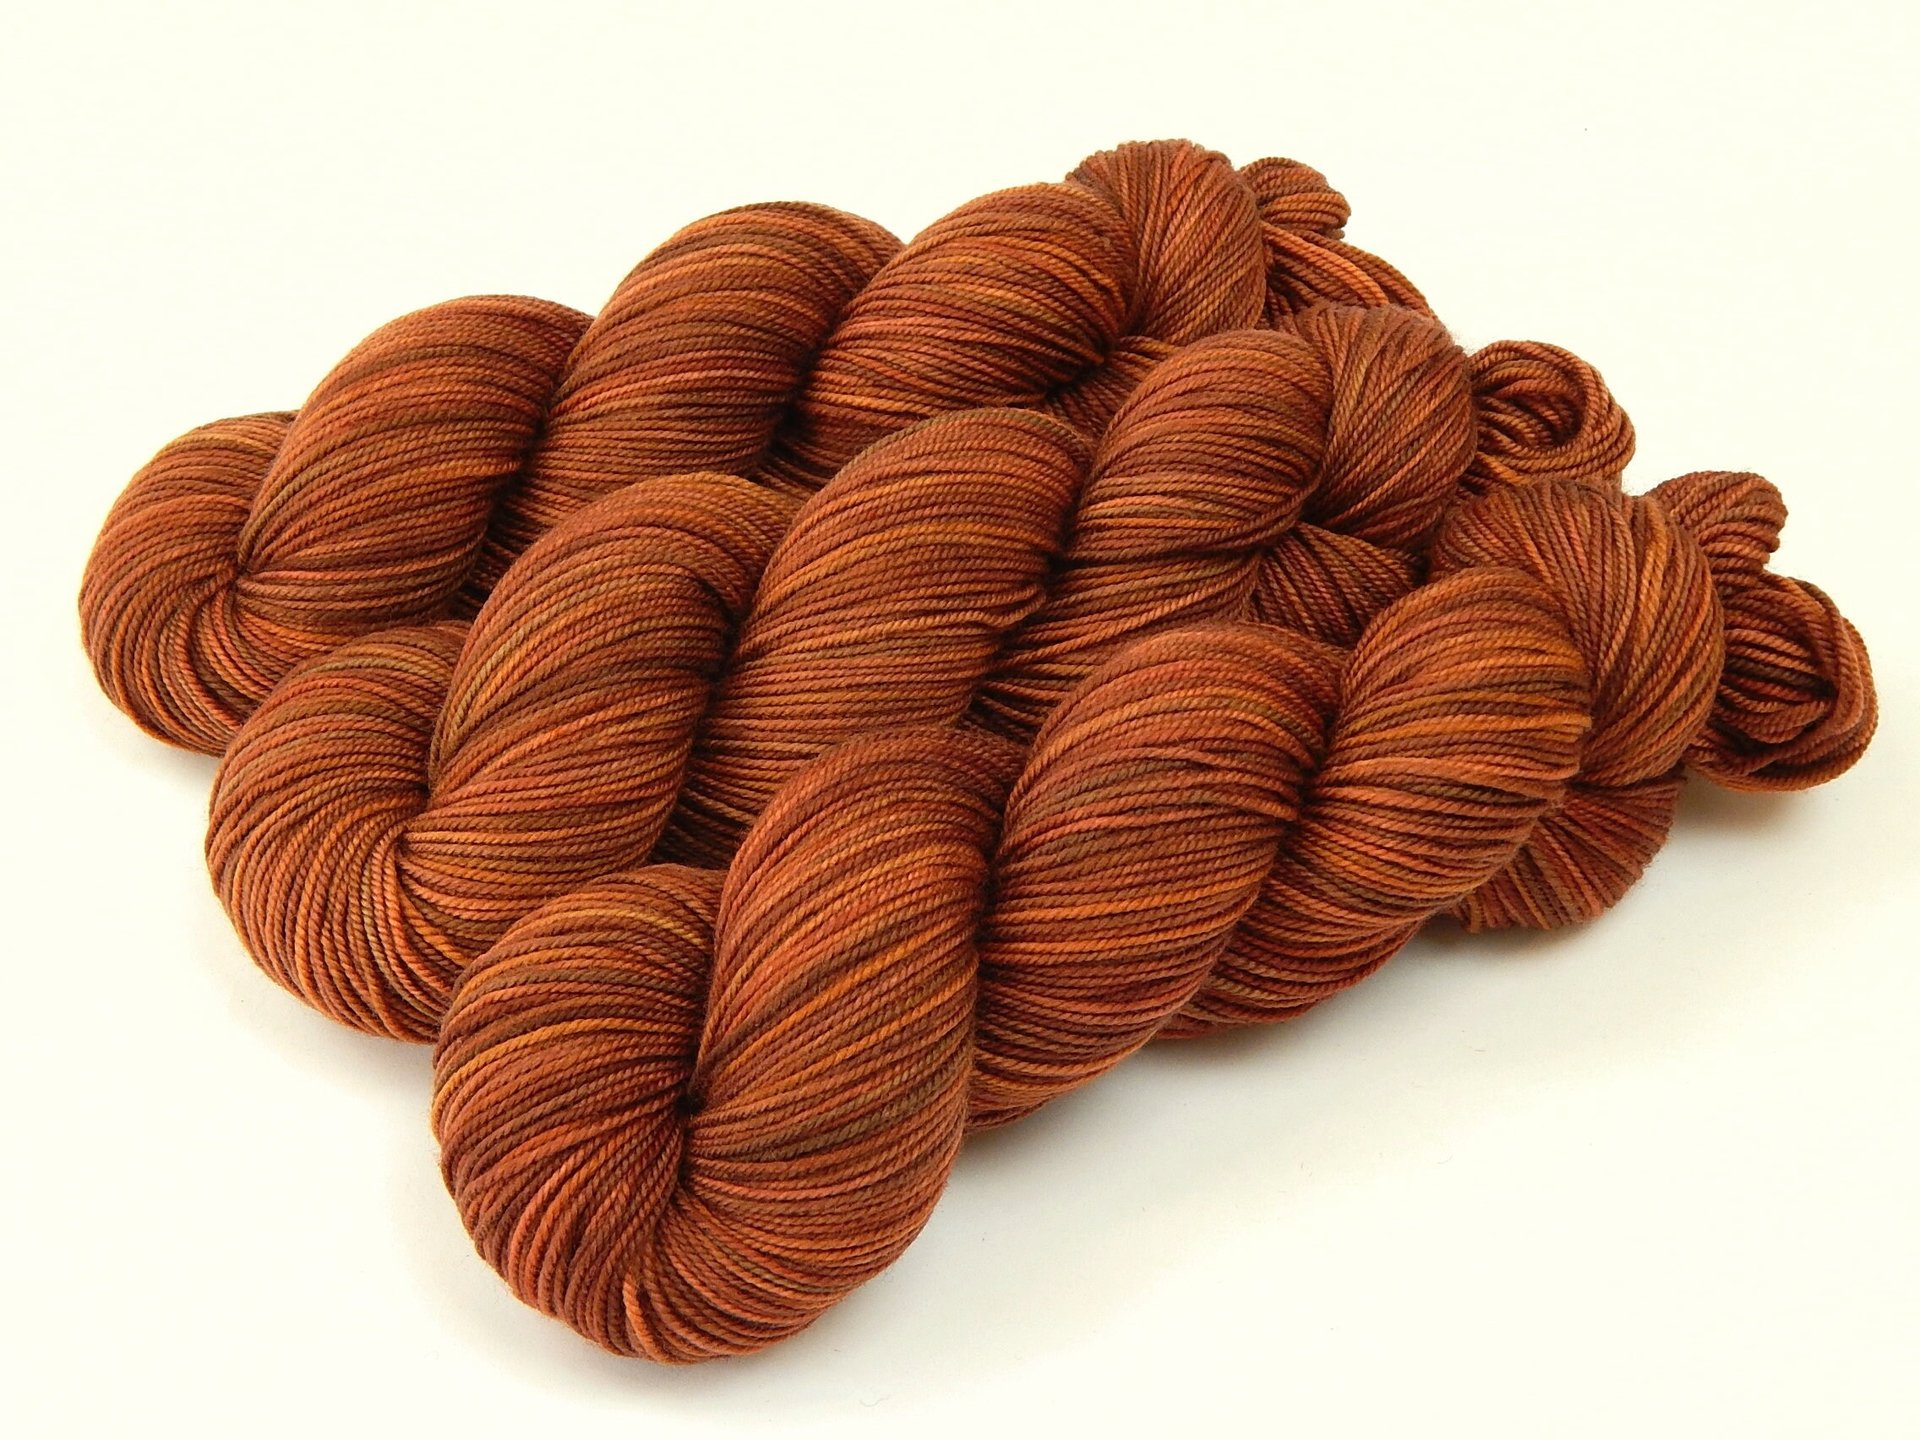 Hand Dyed Yarn, Sport Weight Superwash Merino Wool - Spice - Indie Dyed Knitting Yarn, Burnt Orange Rust Autumn Sock Yarn, Ready to Ship